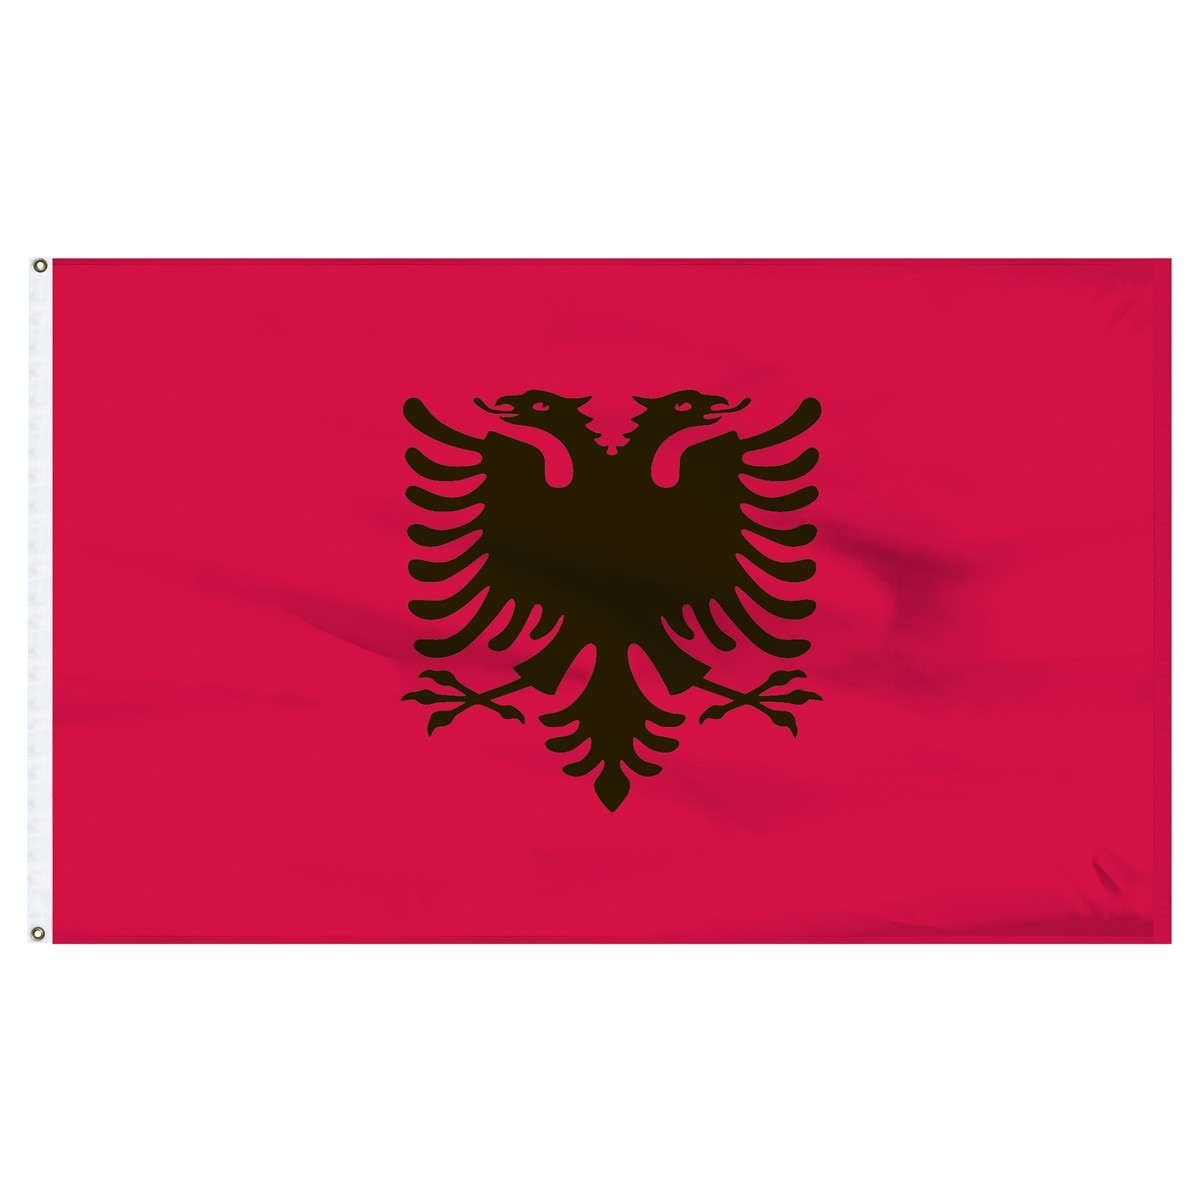 Albania 4' x 6' Outdoor Nylon Country Flag